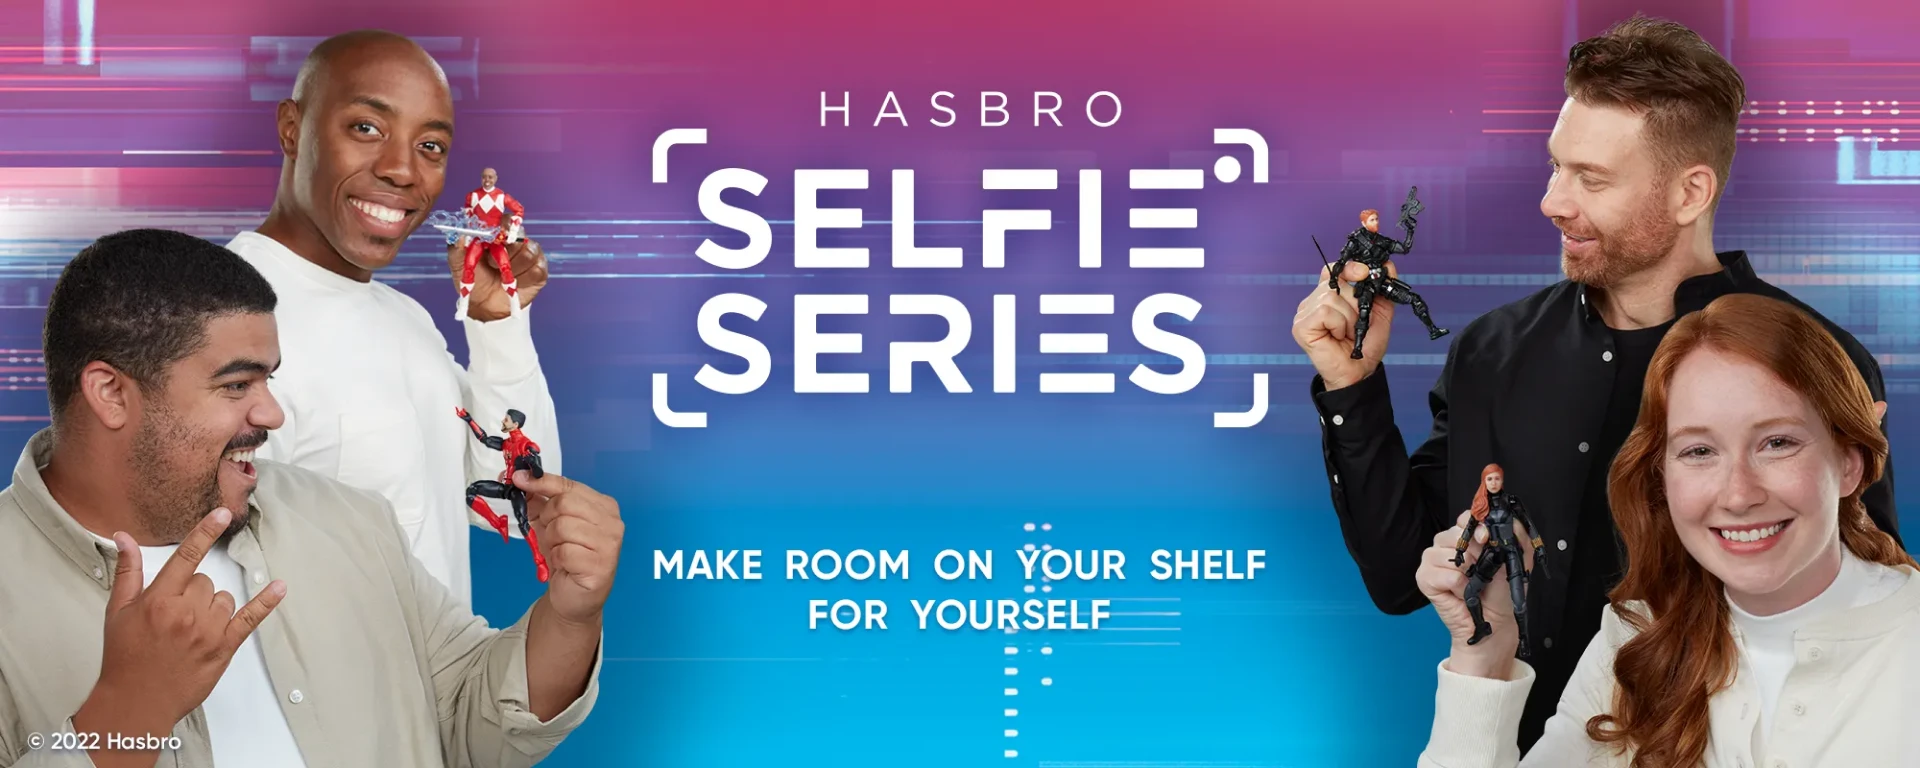 Hasbro Selfie Series thumbnail